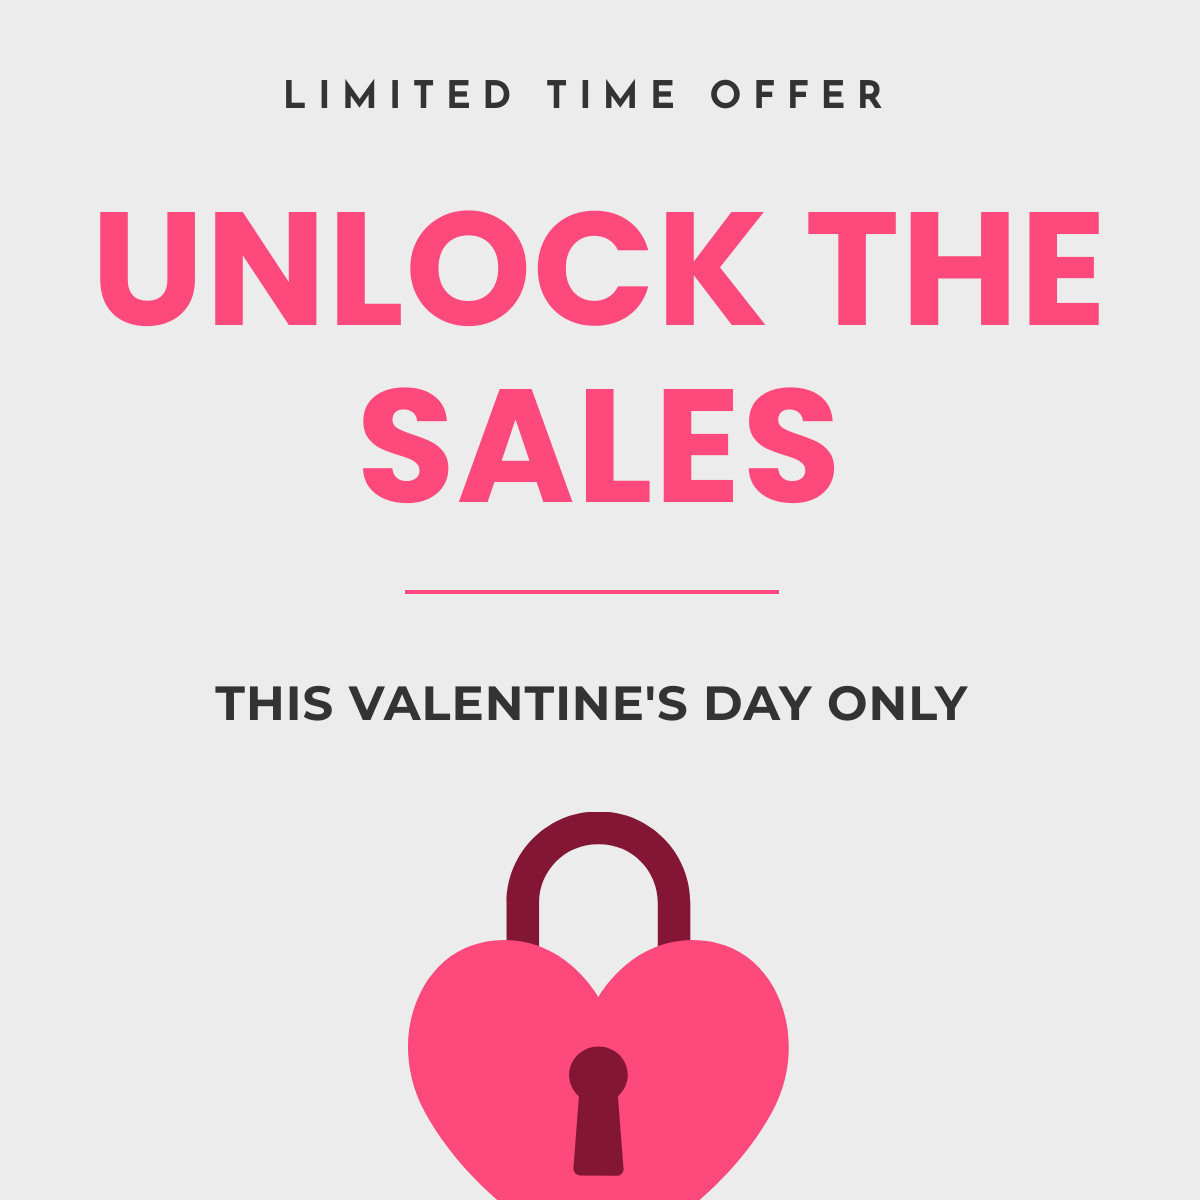 Valentine's Day Unlock Sales